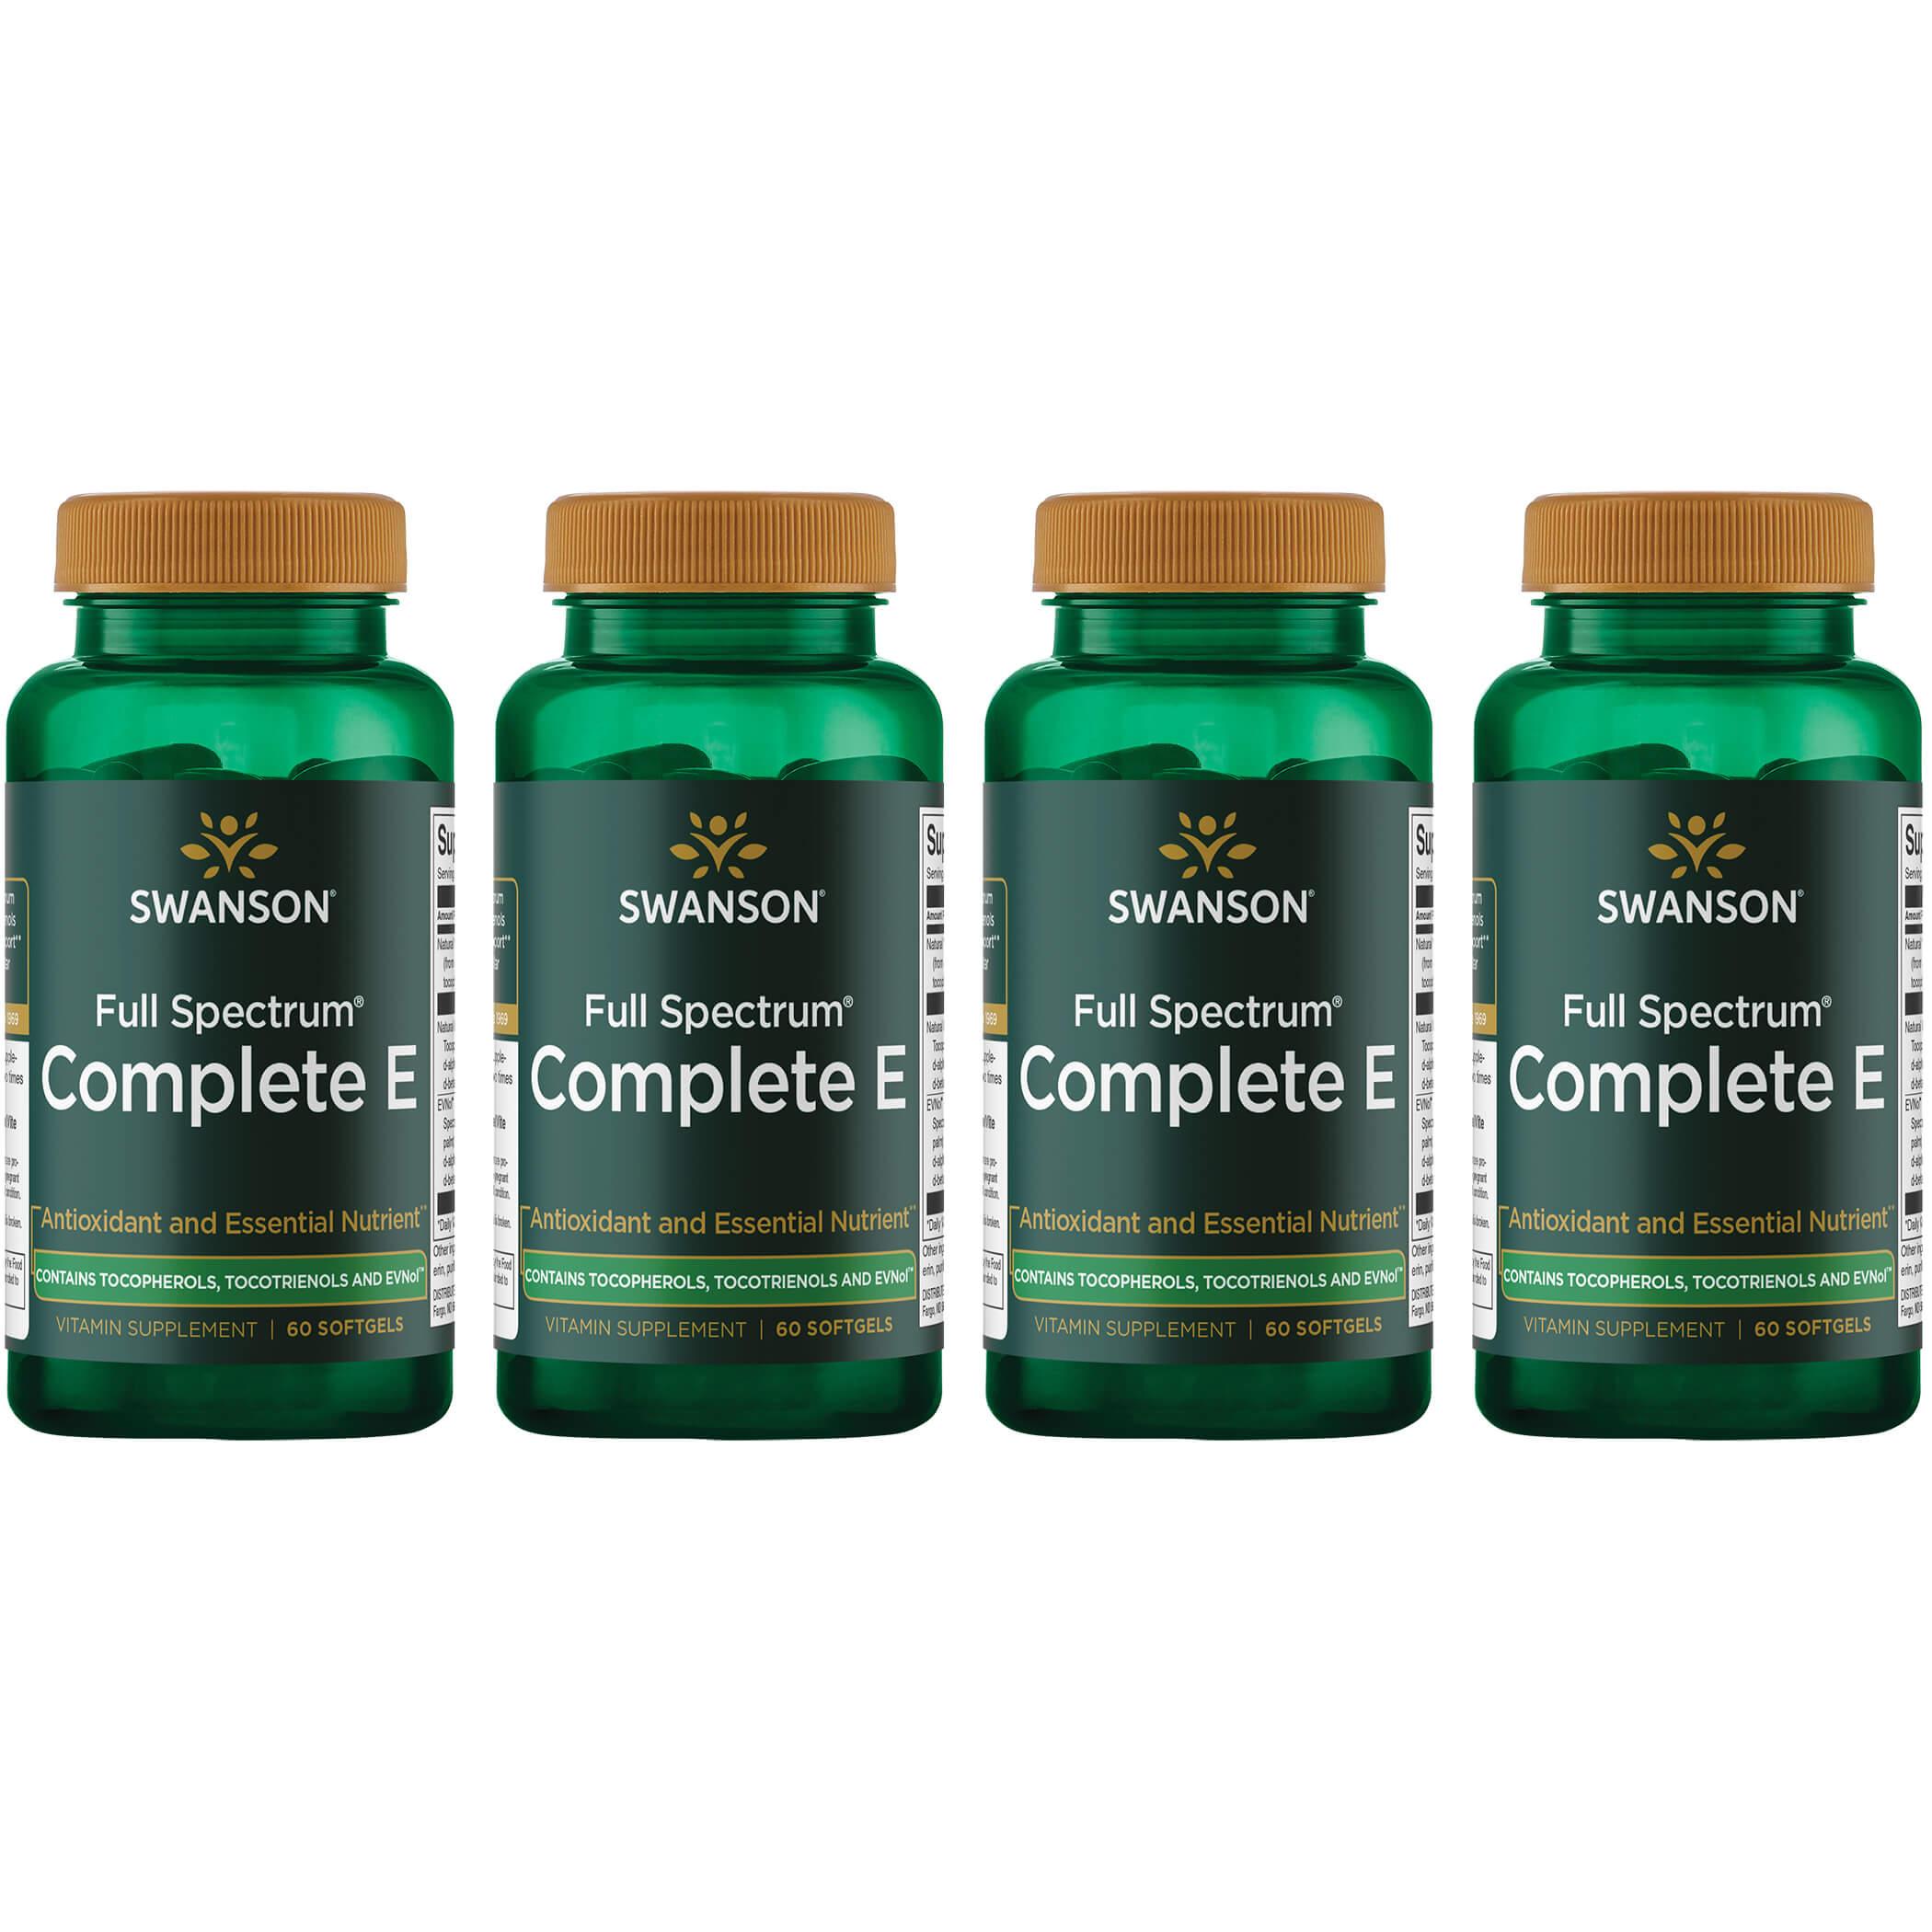 Swanson Ultra Full Spectrum Complete E Contain Tocopherols, Tocotrienols & Envol 4 Pack Vitamin 60 Soft Gels Vitamin E